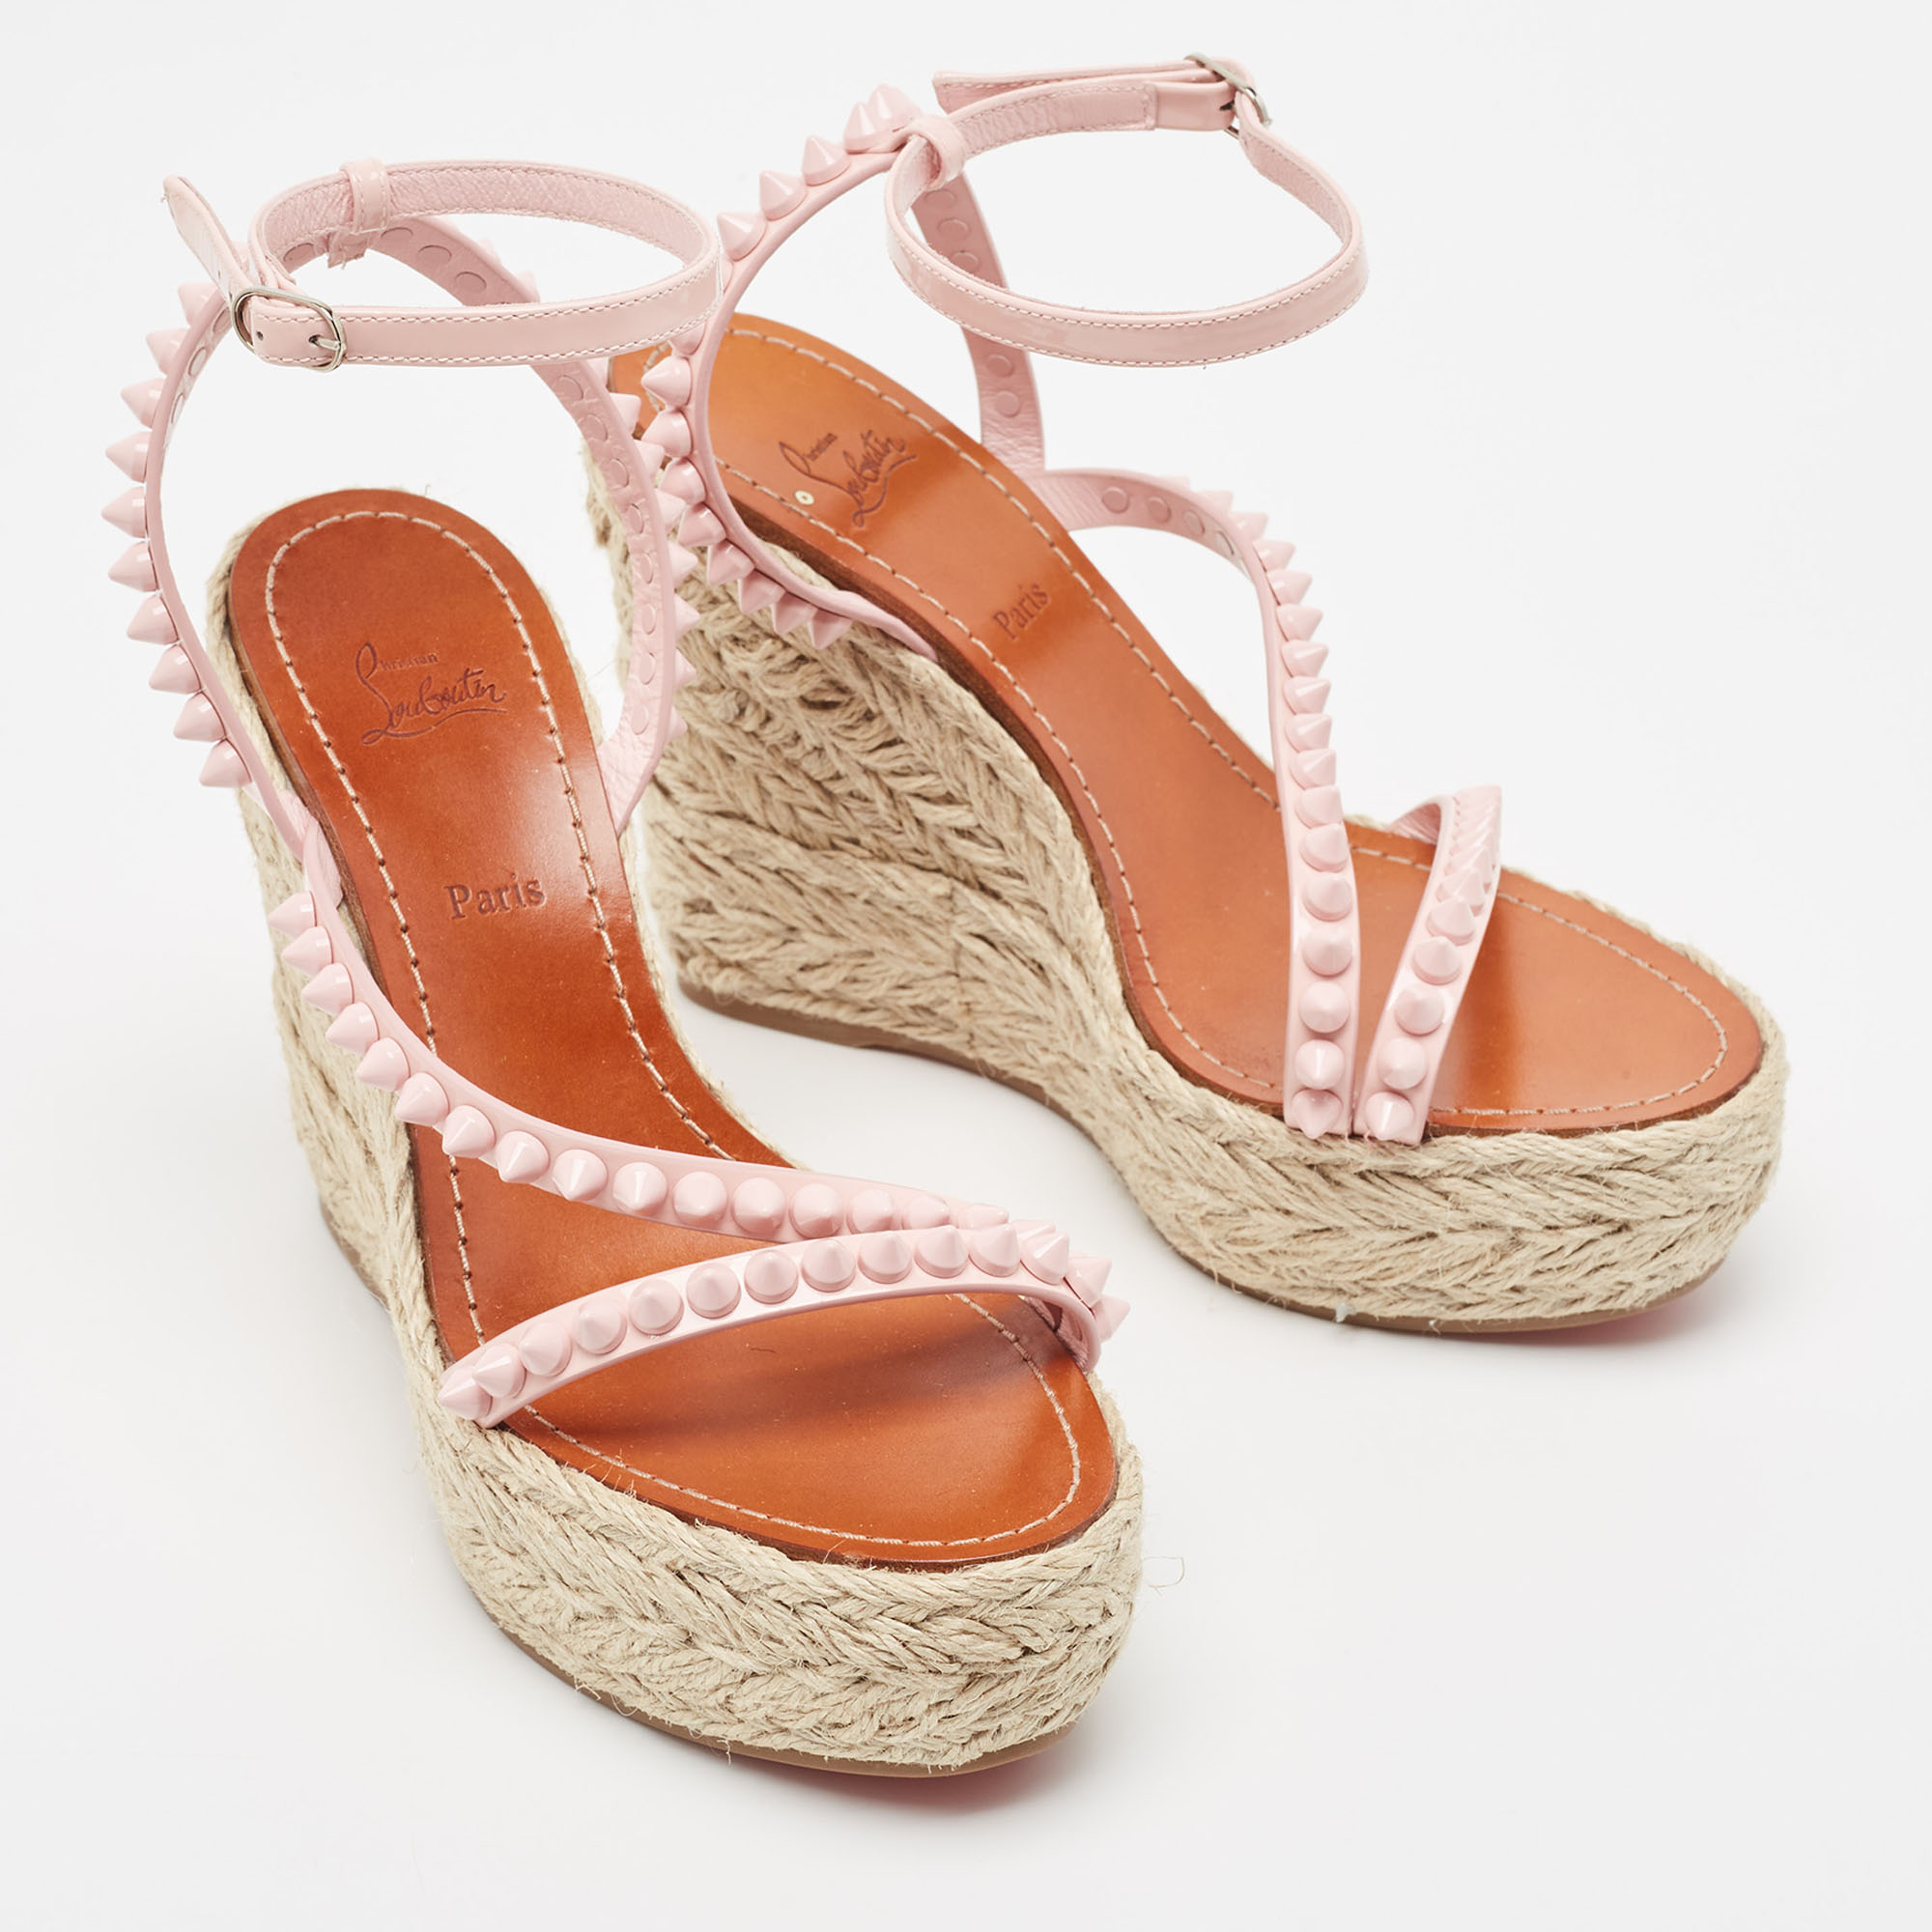 Christian Louboutin Pink Patent Leather Mafaldina Spike Wedge Espadrille Ankle Strap Sandals Size 37